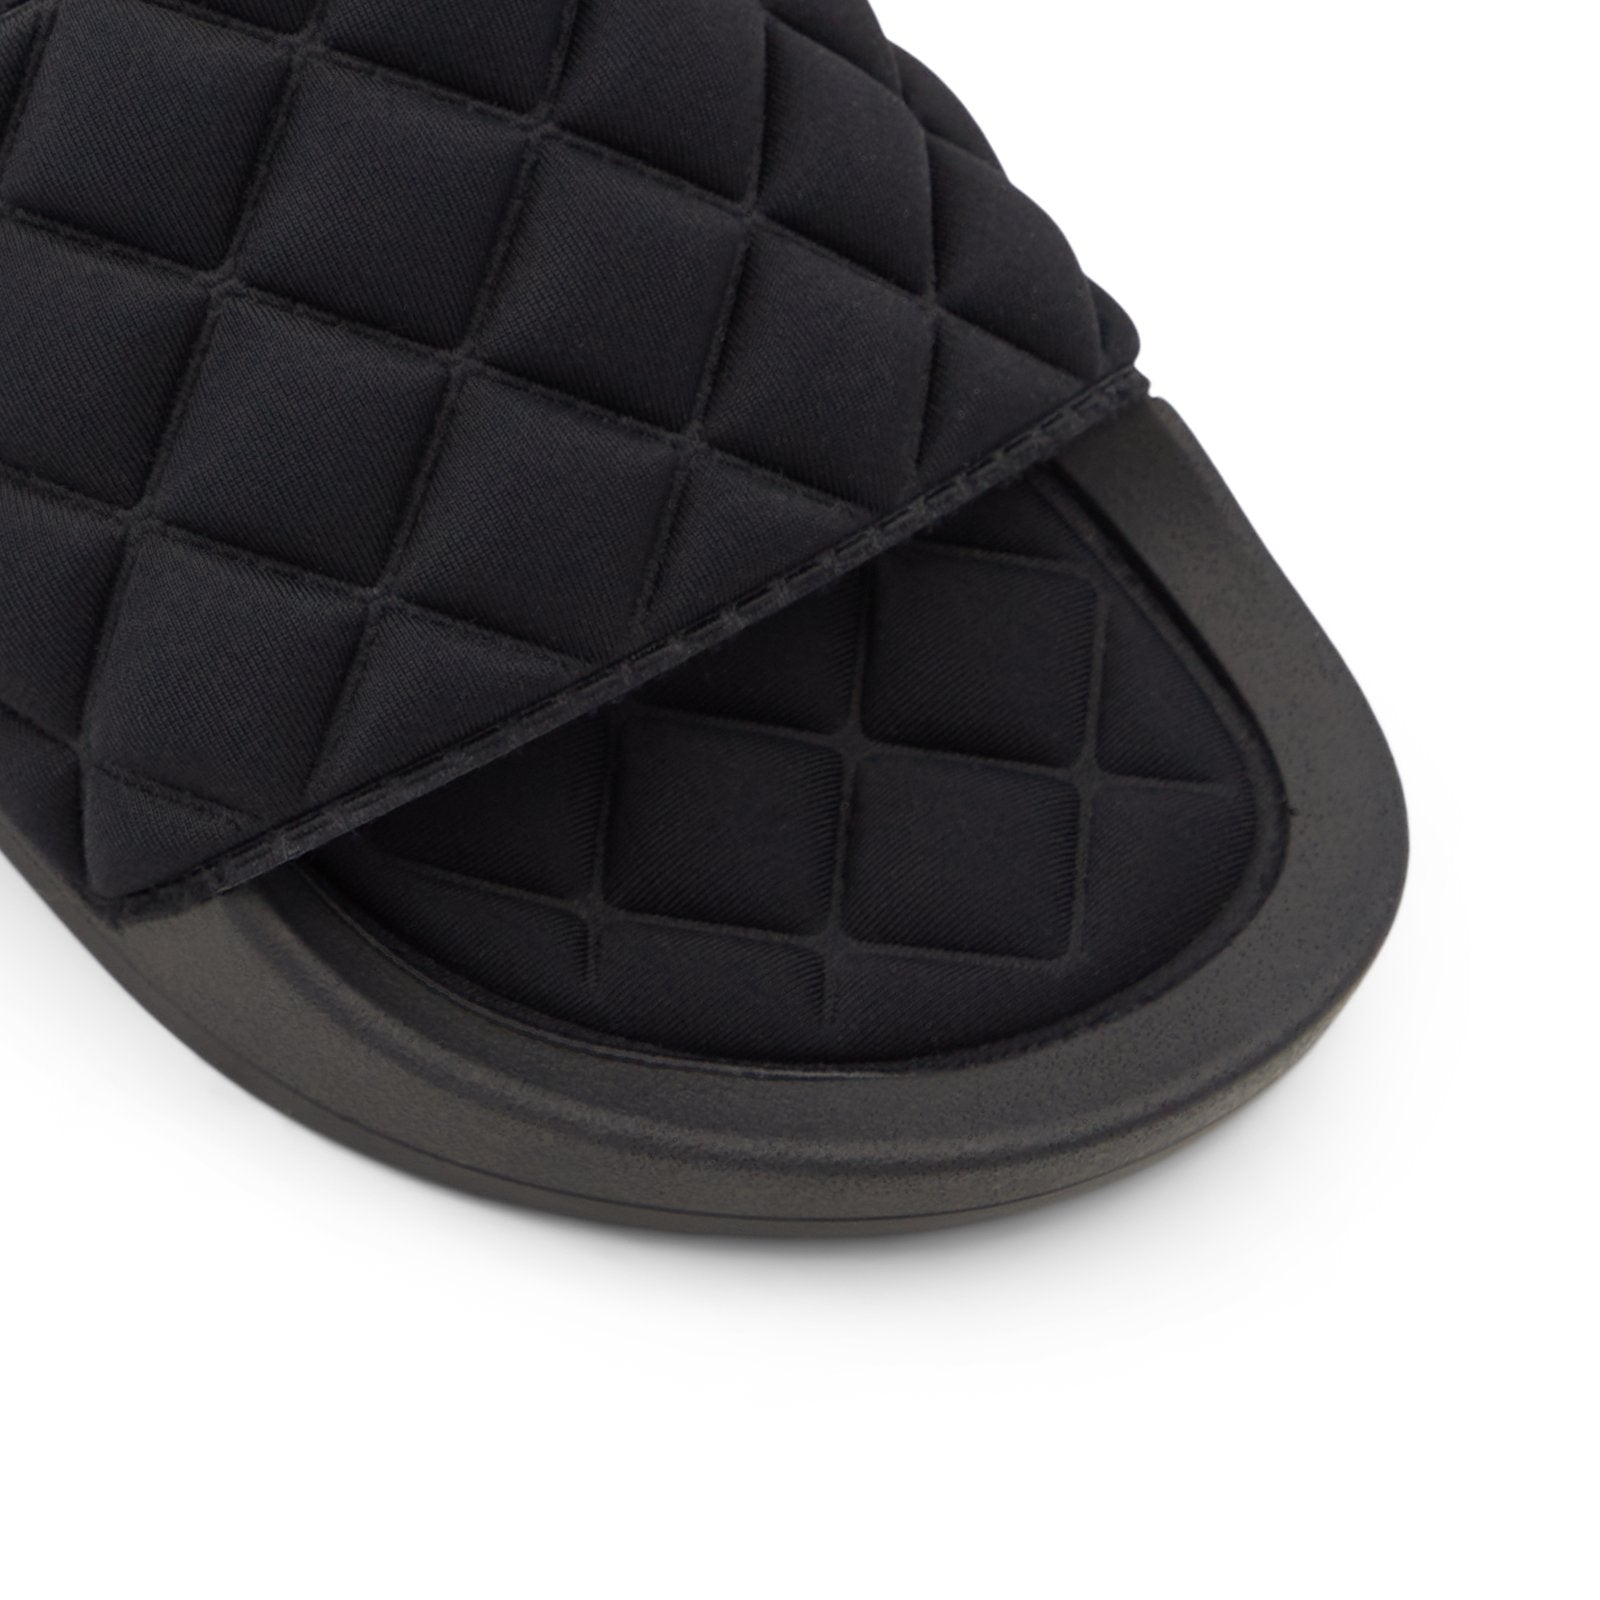 KAEANIELL Women Shoes - BLACK - CALL IT SPRING KSA